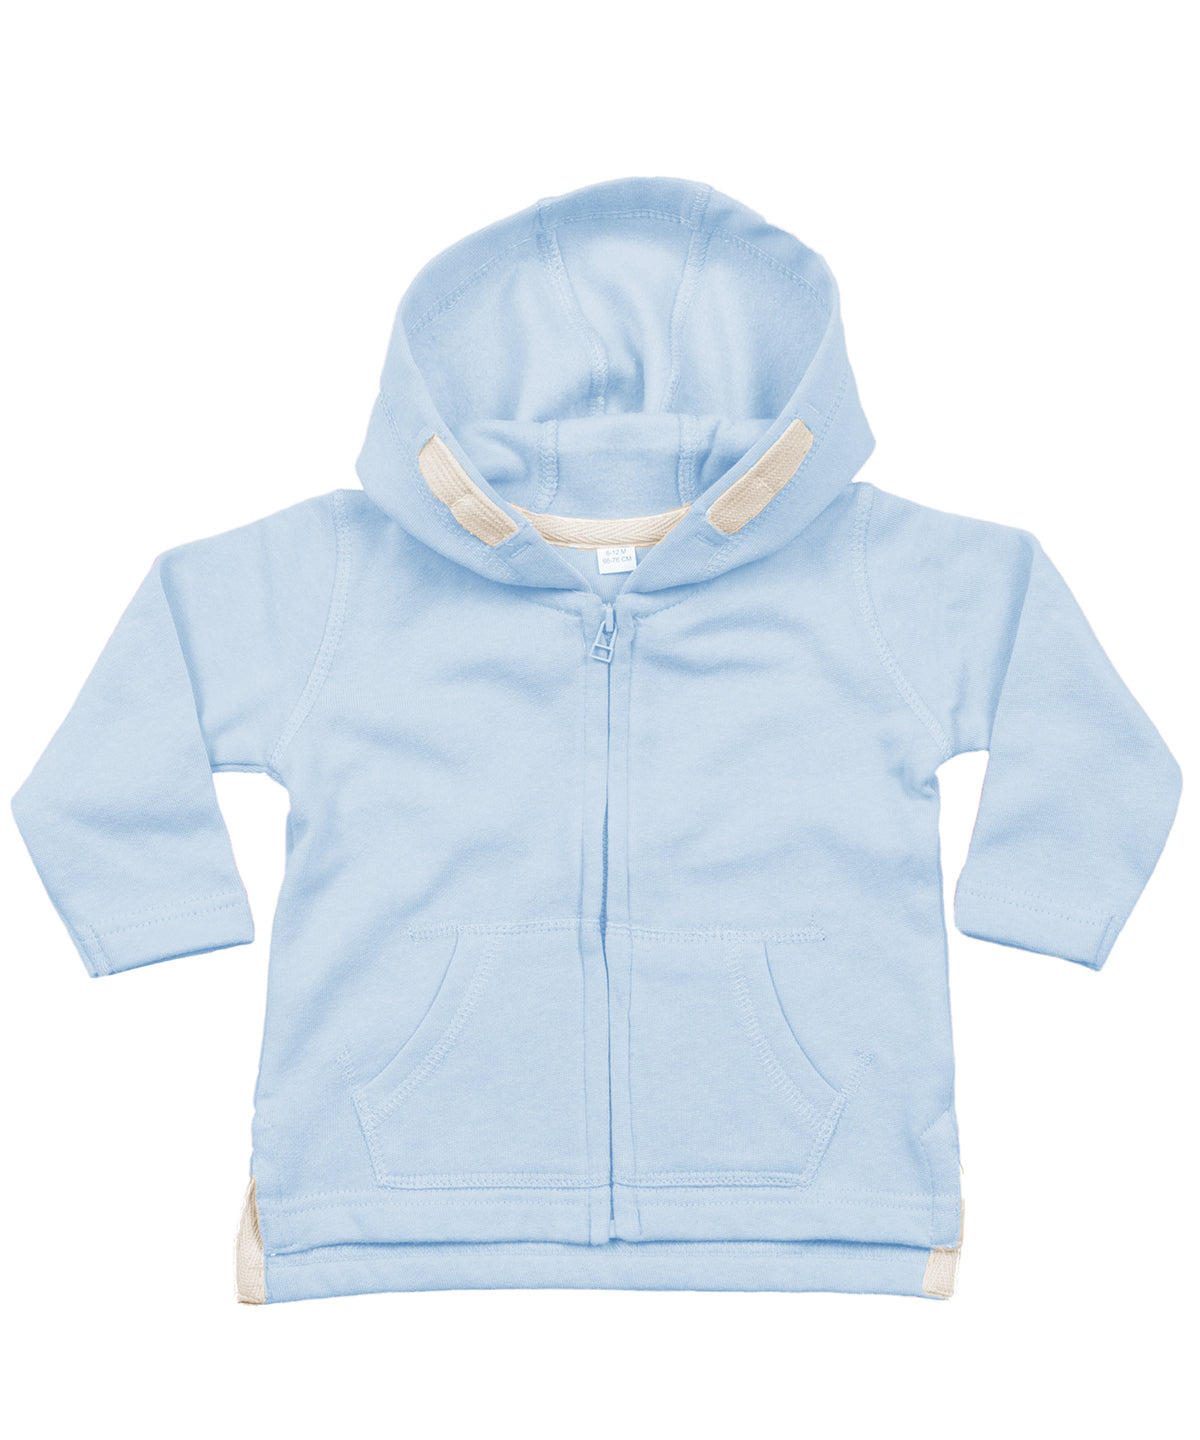 Organic Baby/Infant Zip Hoodie